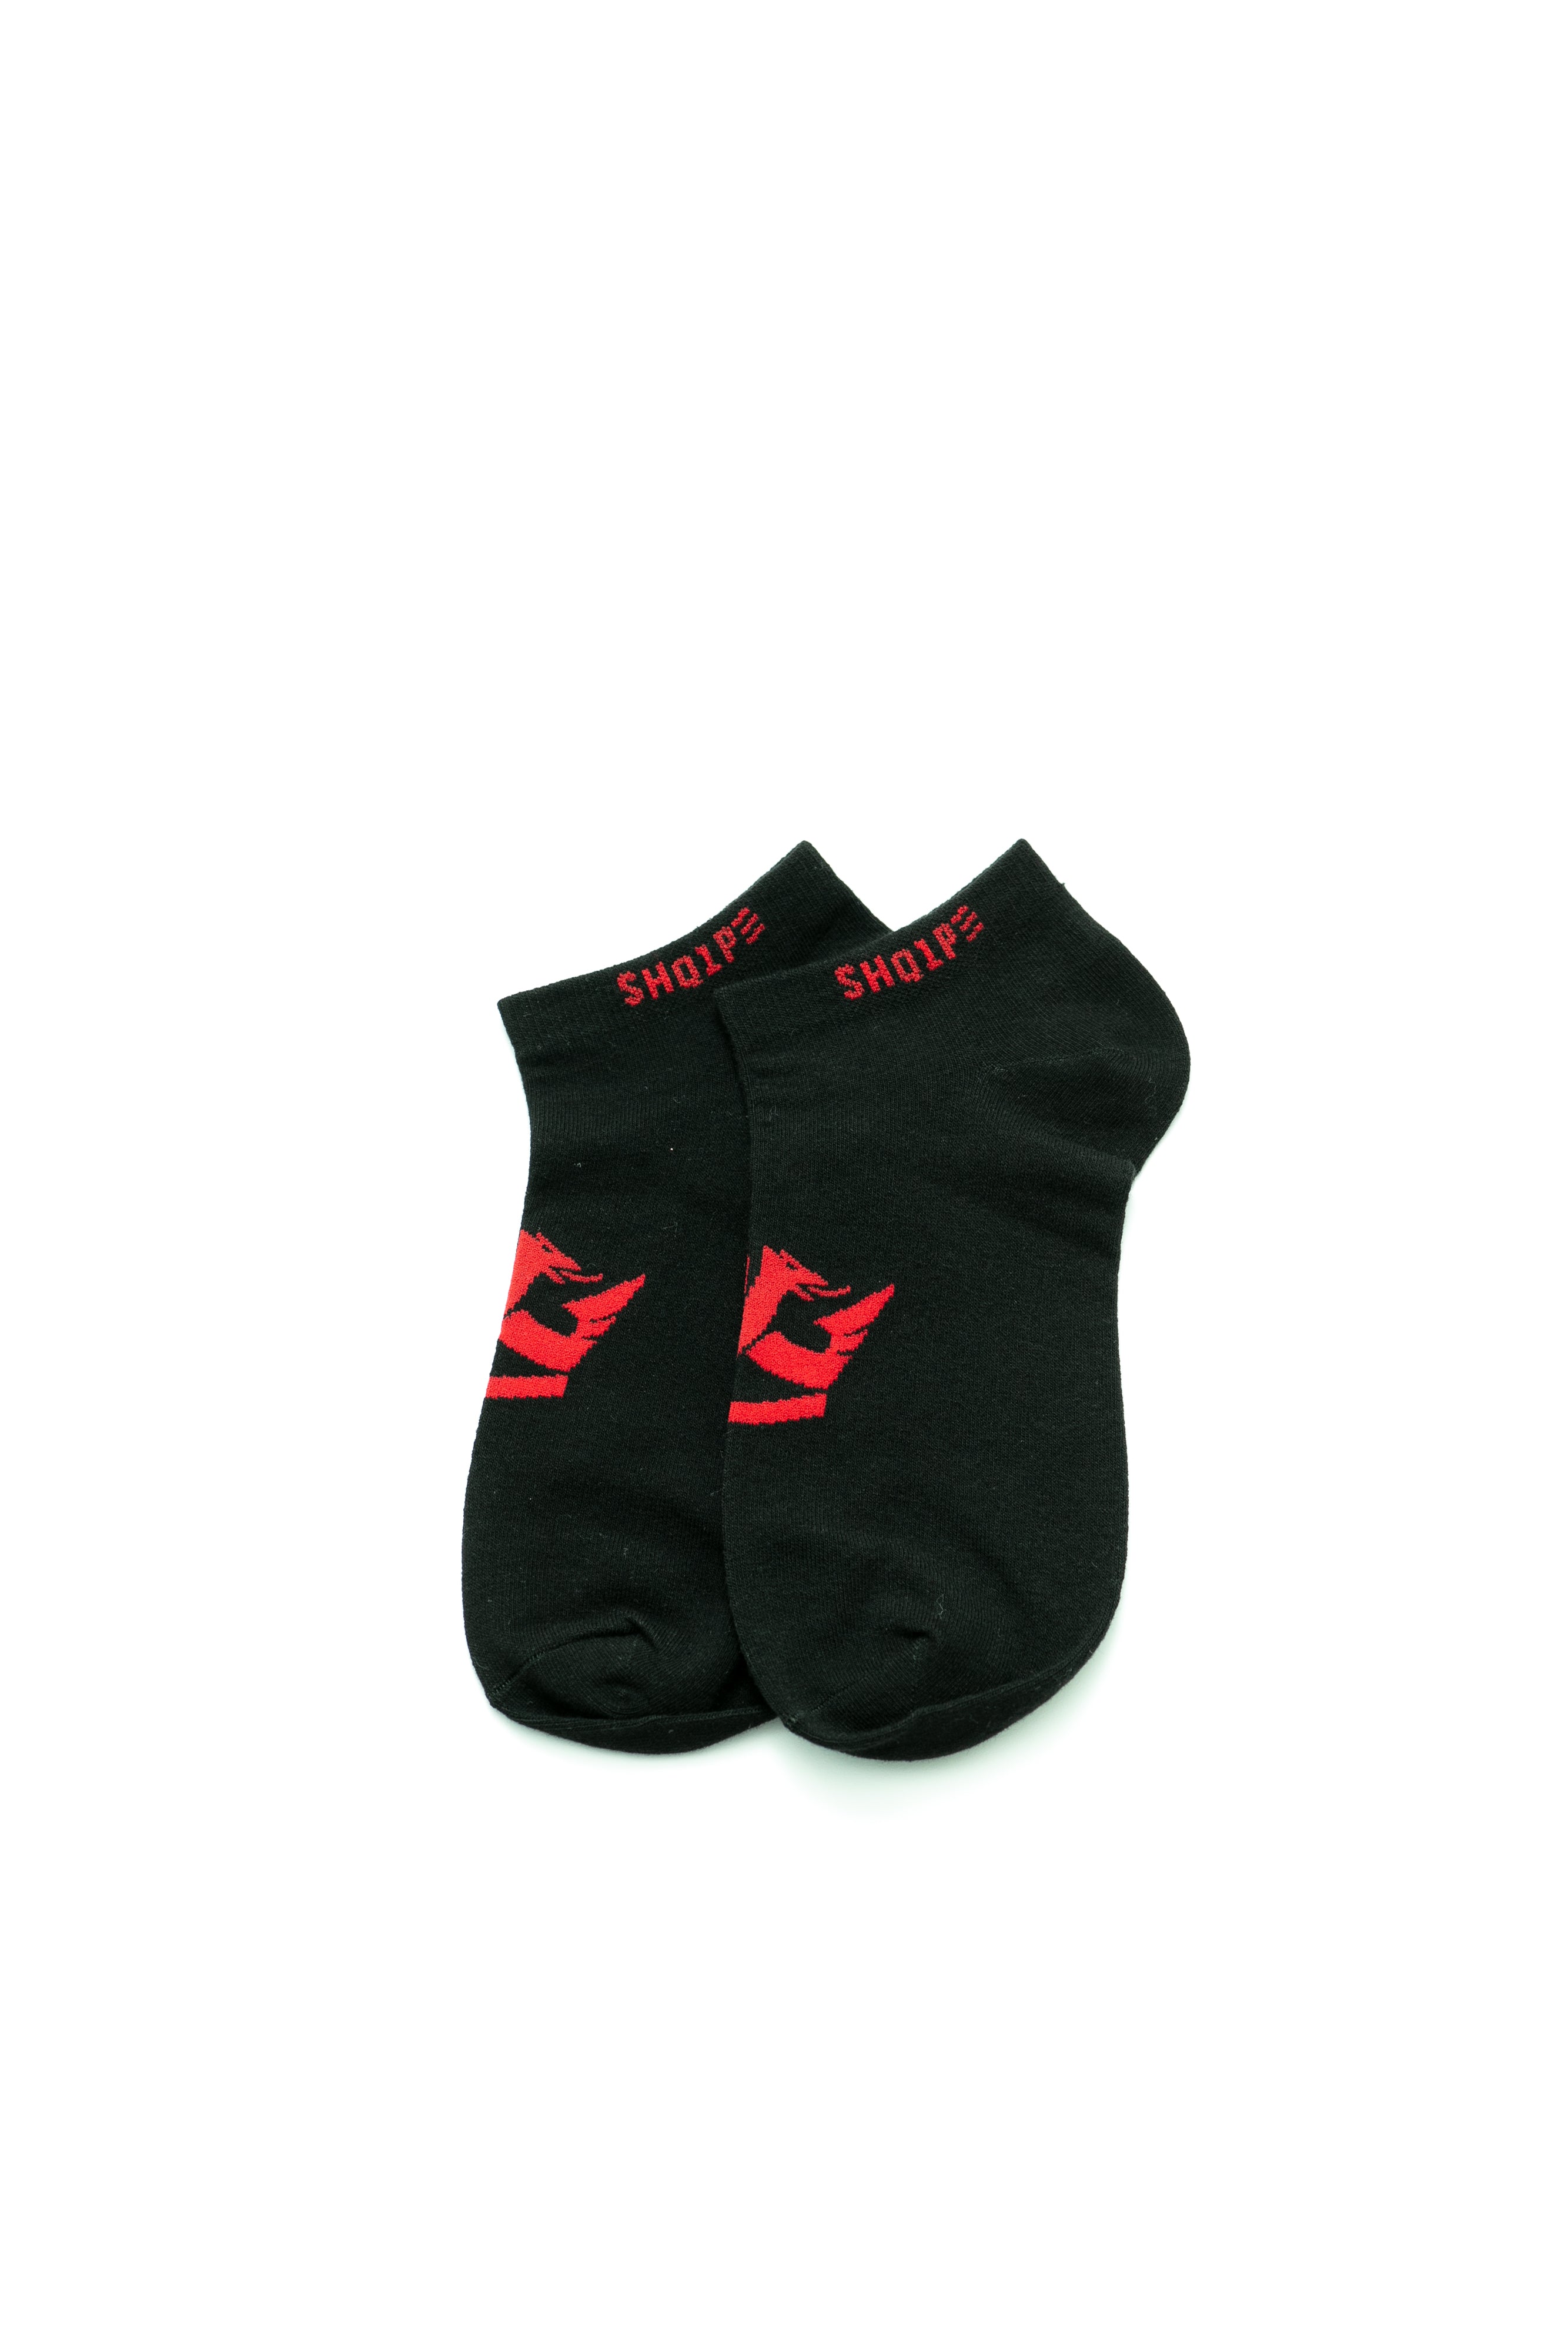 Shq1pe Socken Schwarz/Rot